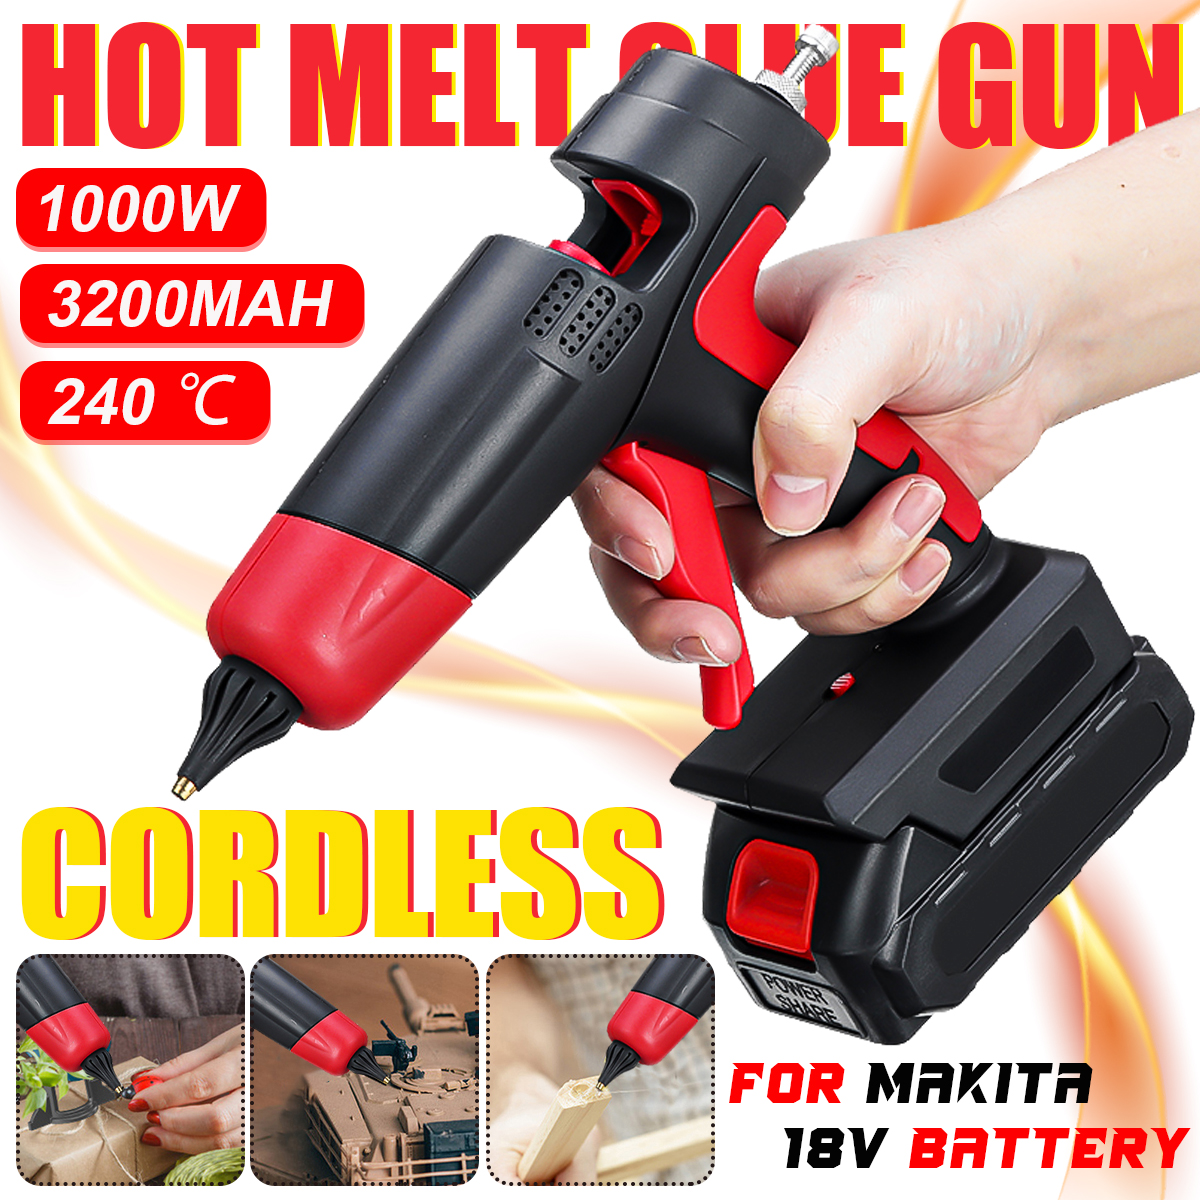 Hot-Melt-Glue-Guns-Cordless-Rechargeable-Hot-Glue-Applicator-Home-Improvement-Craft-DIY-For-Makita-B-1903421-1